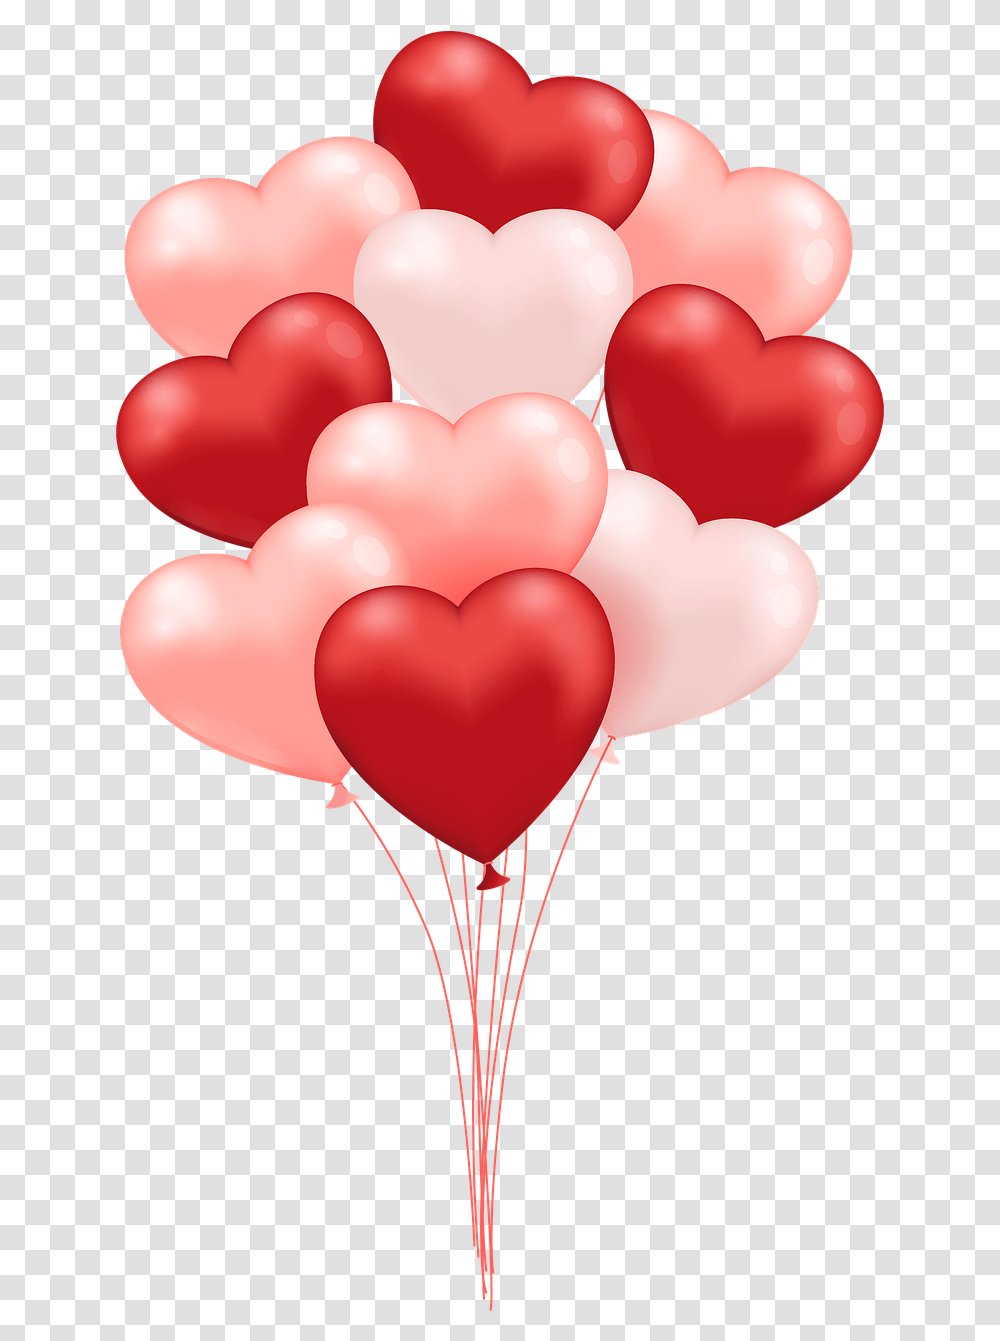 Valentine Balloons Heart Free Image On Pixabay Ballon Herz Transparent Png